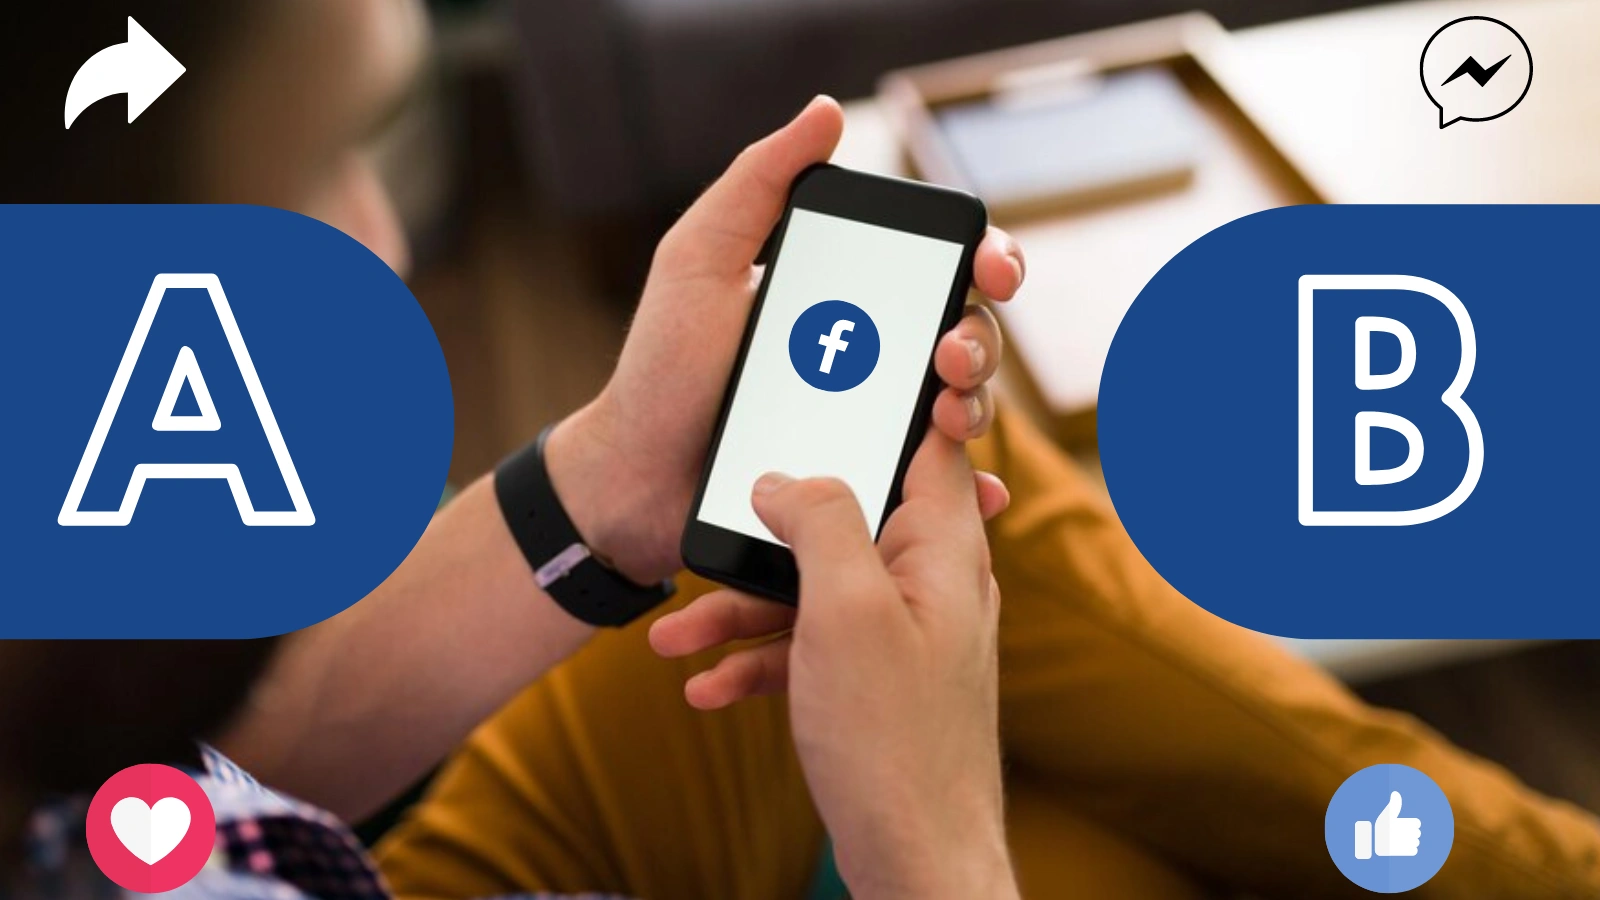 facebook-ab-testing-ab-testing-social-media